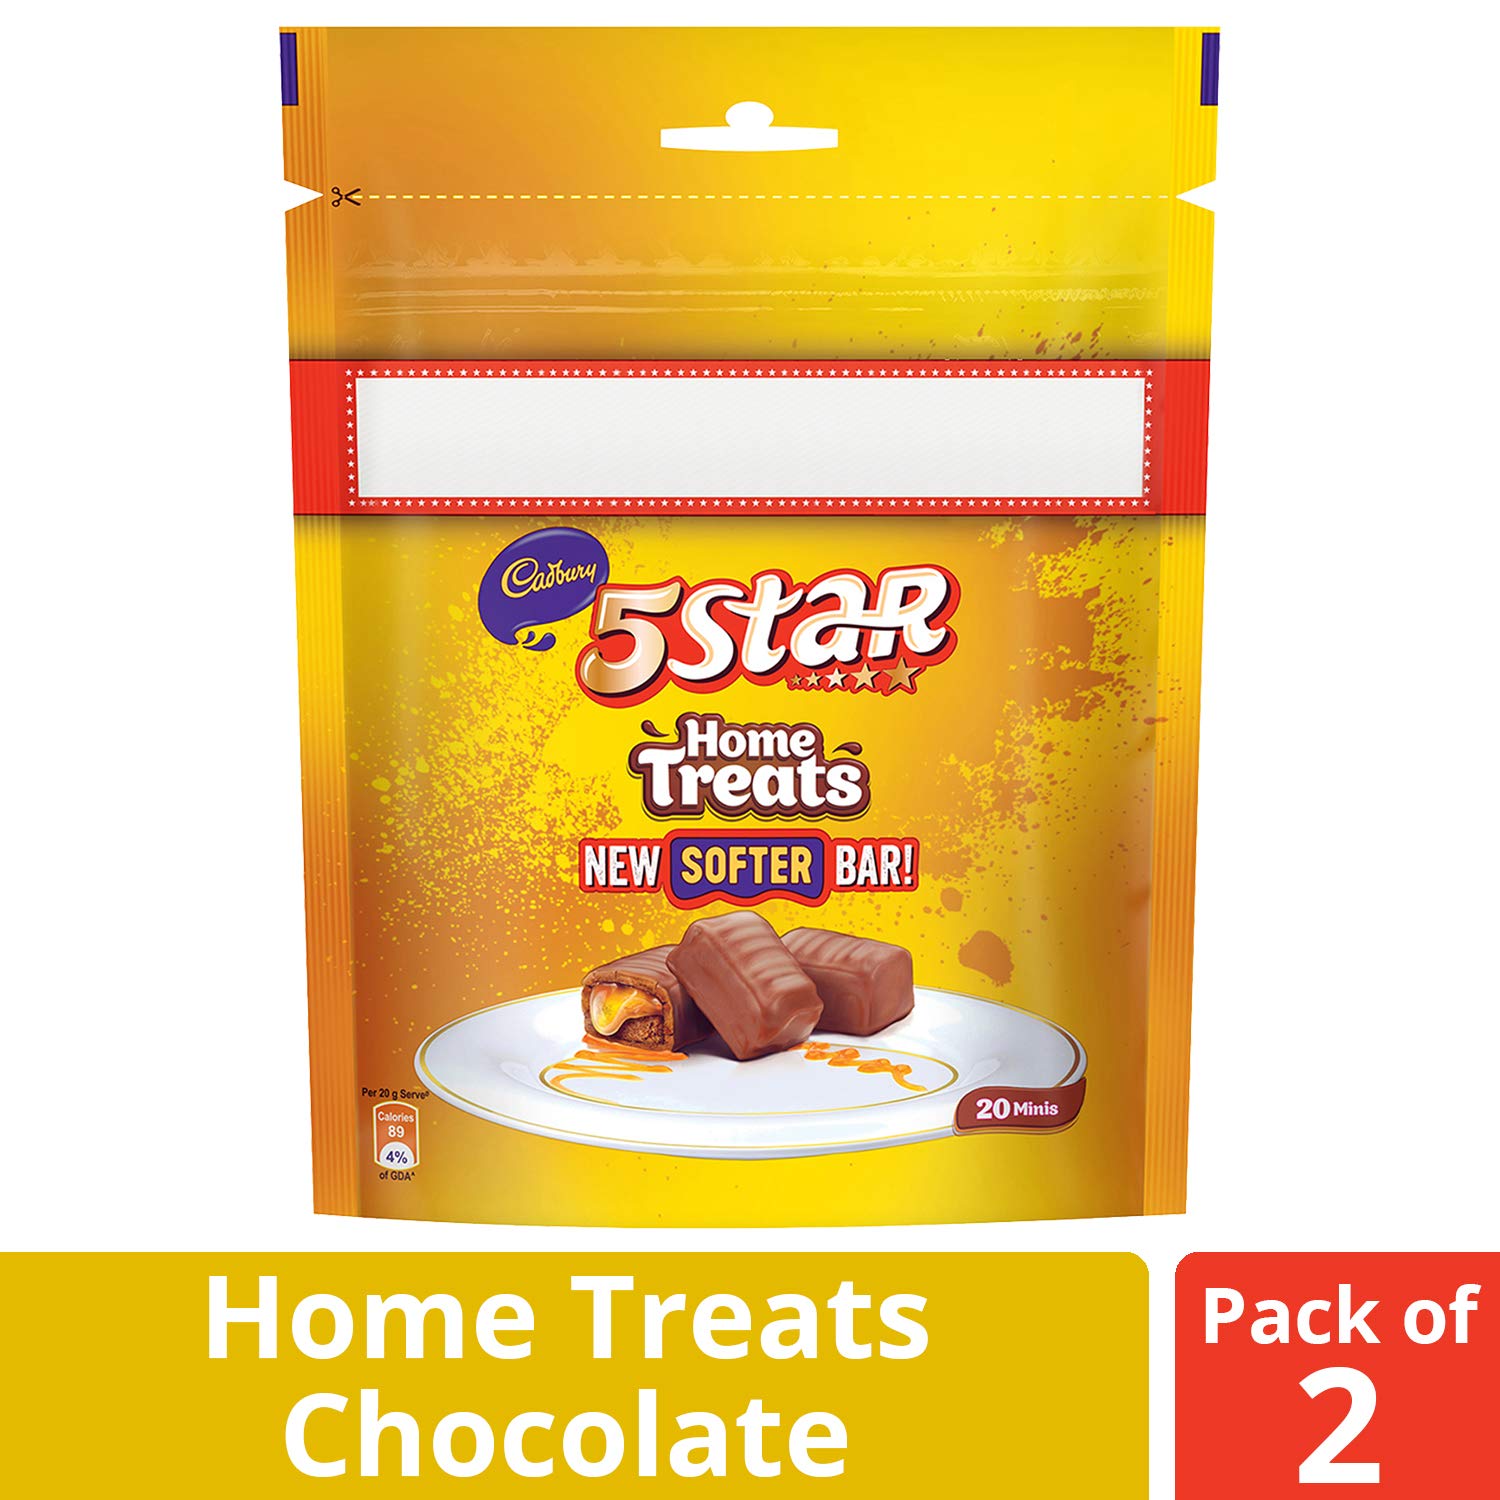 Cadbury 5 Star Chocolate Home Treats Chocolates Bars,191.9 g (Pack of 2)